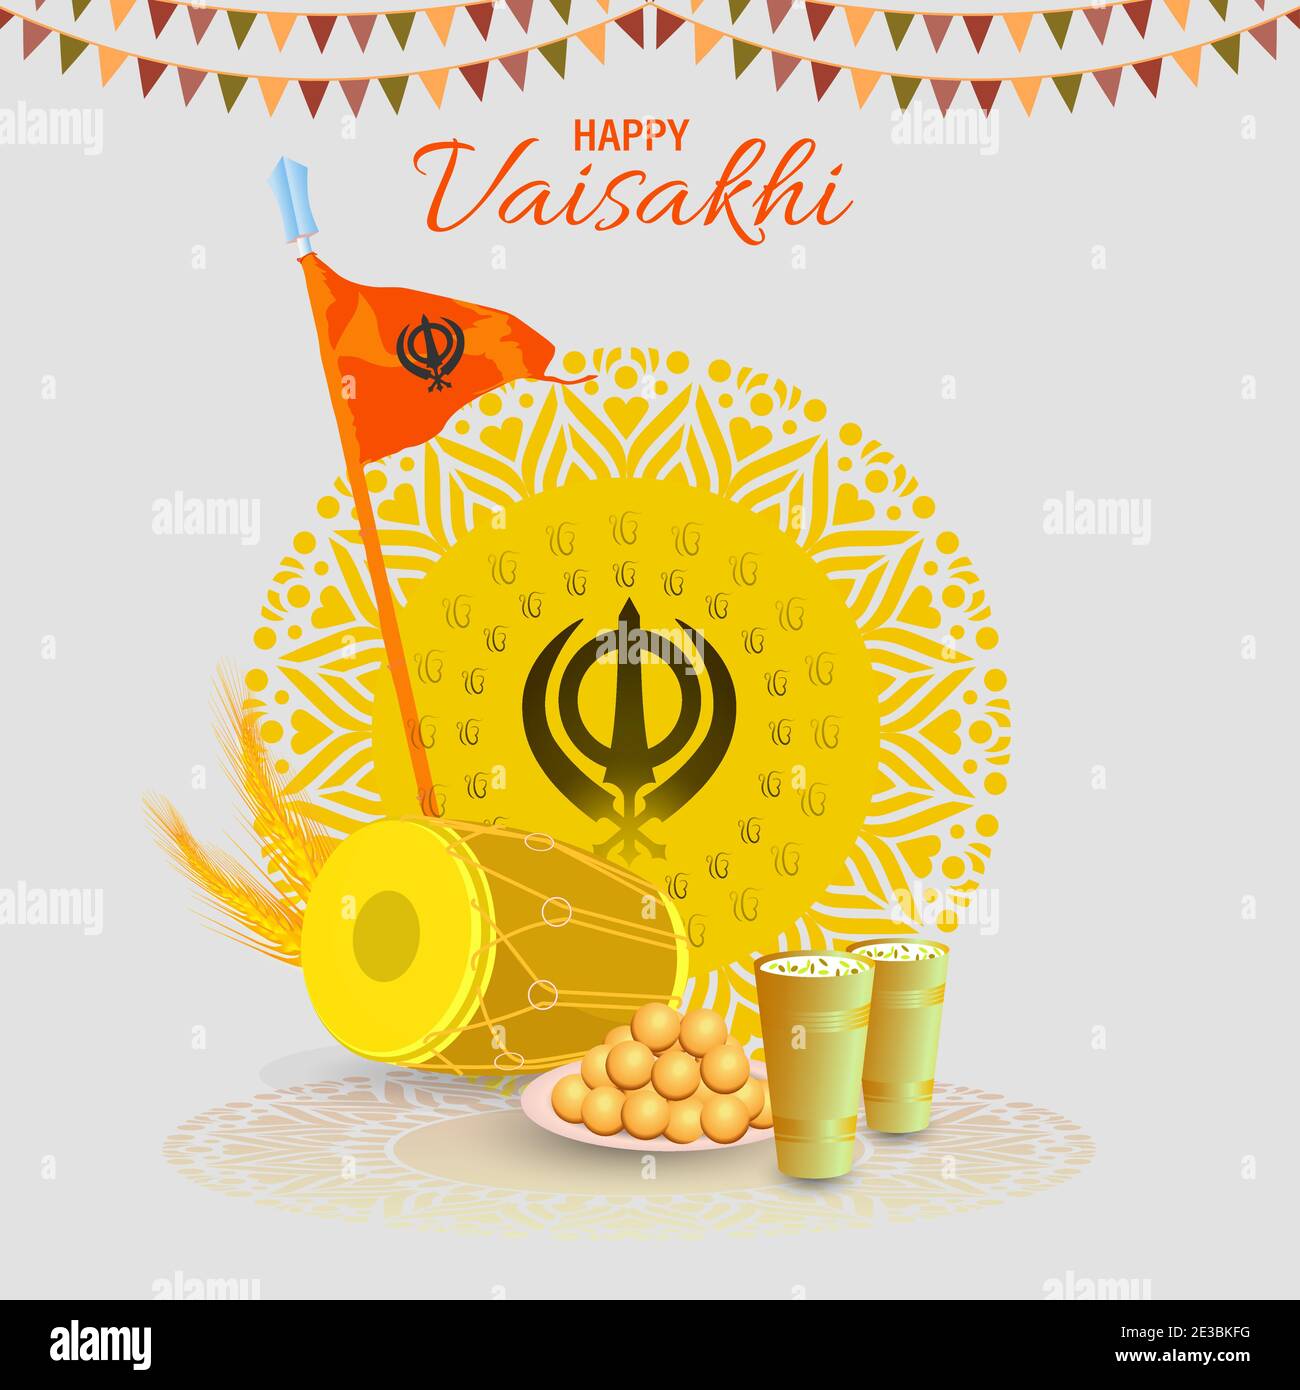 Vector Illustration Of Happy Baisakhi Celebration. Vaisakhi, also ...